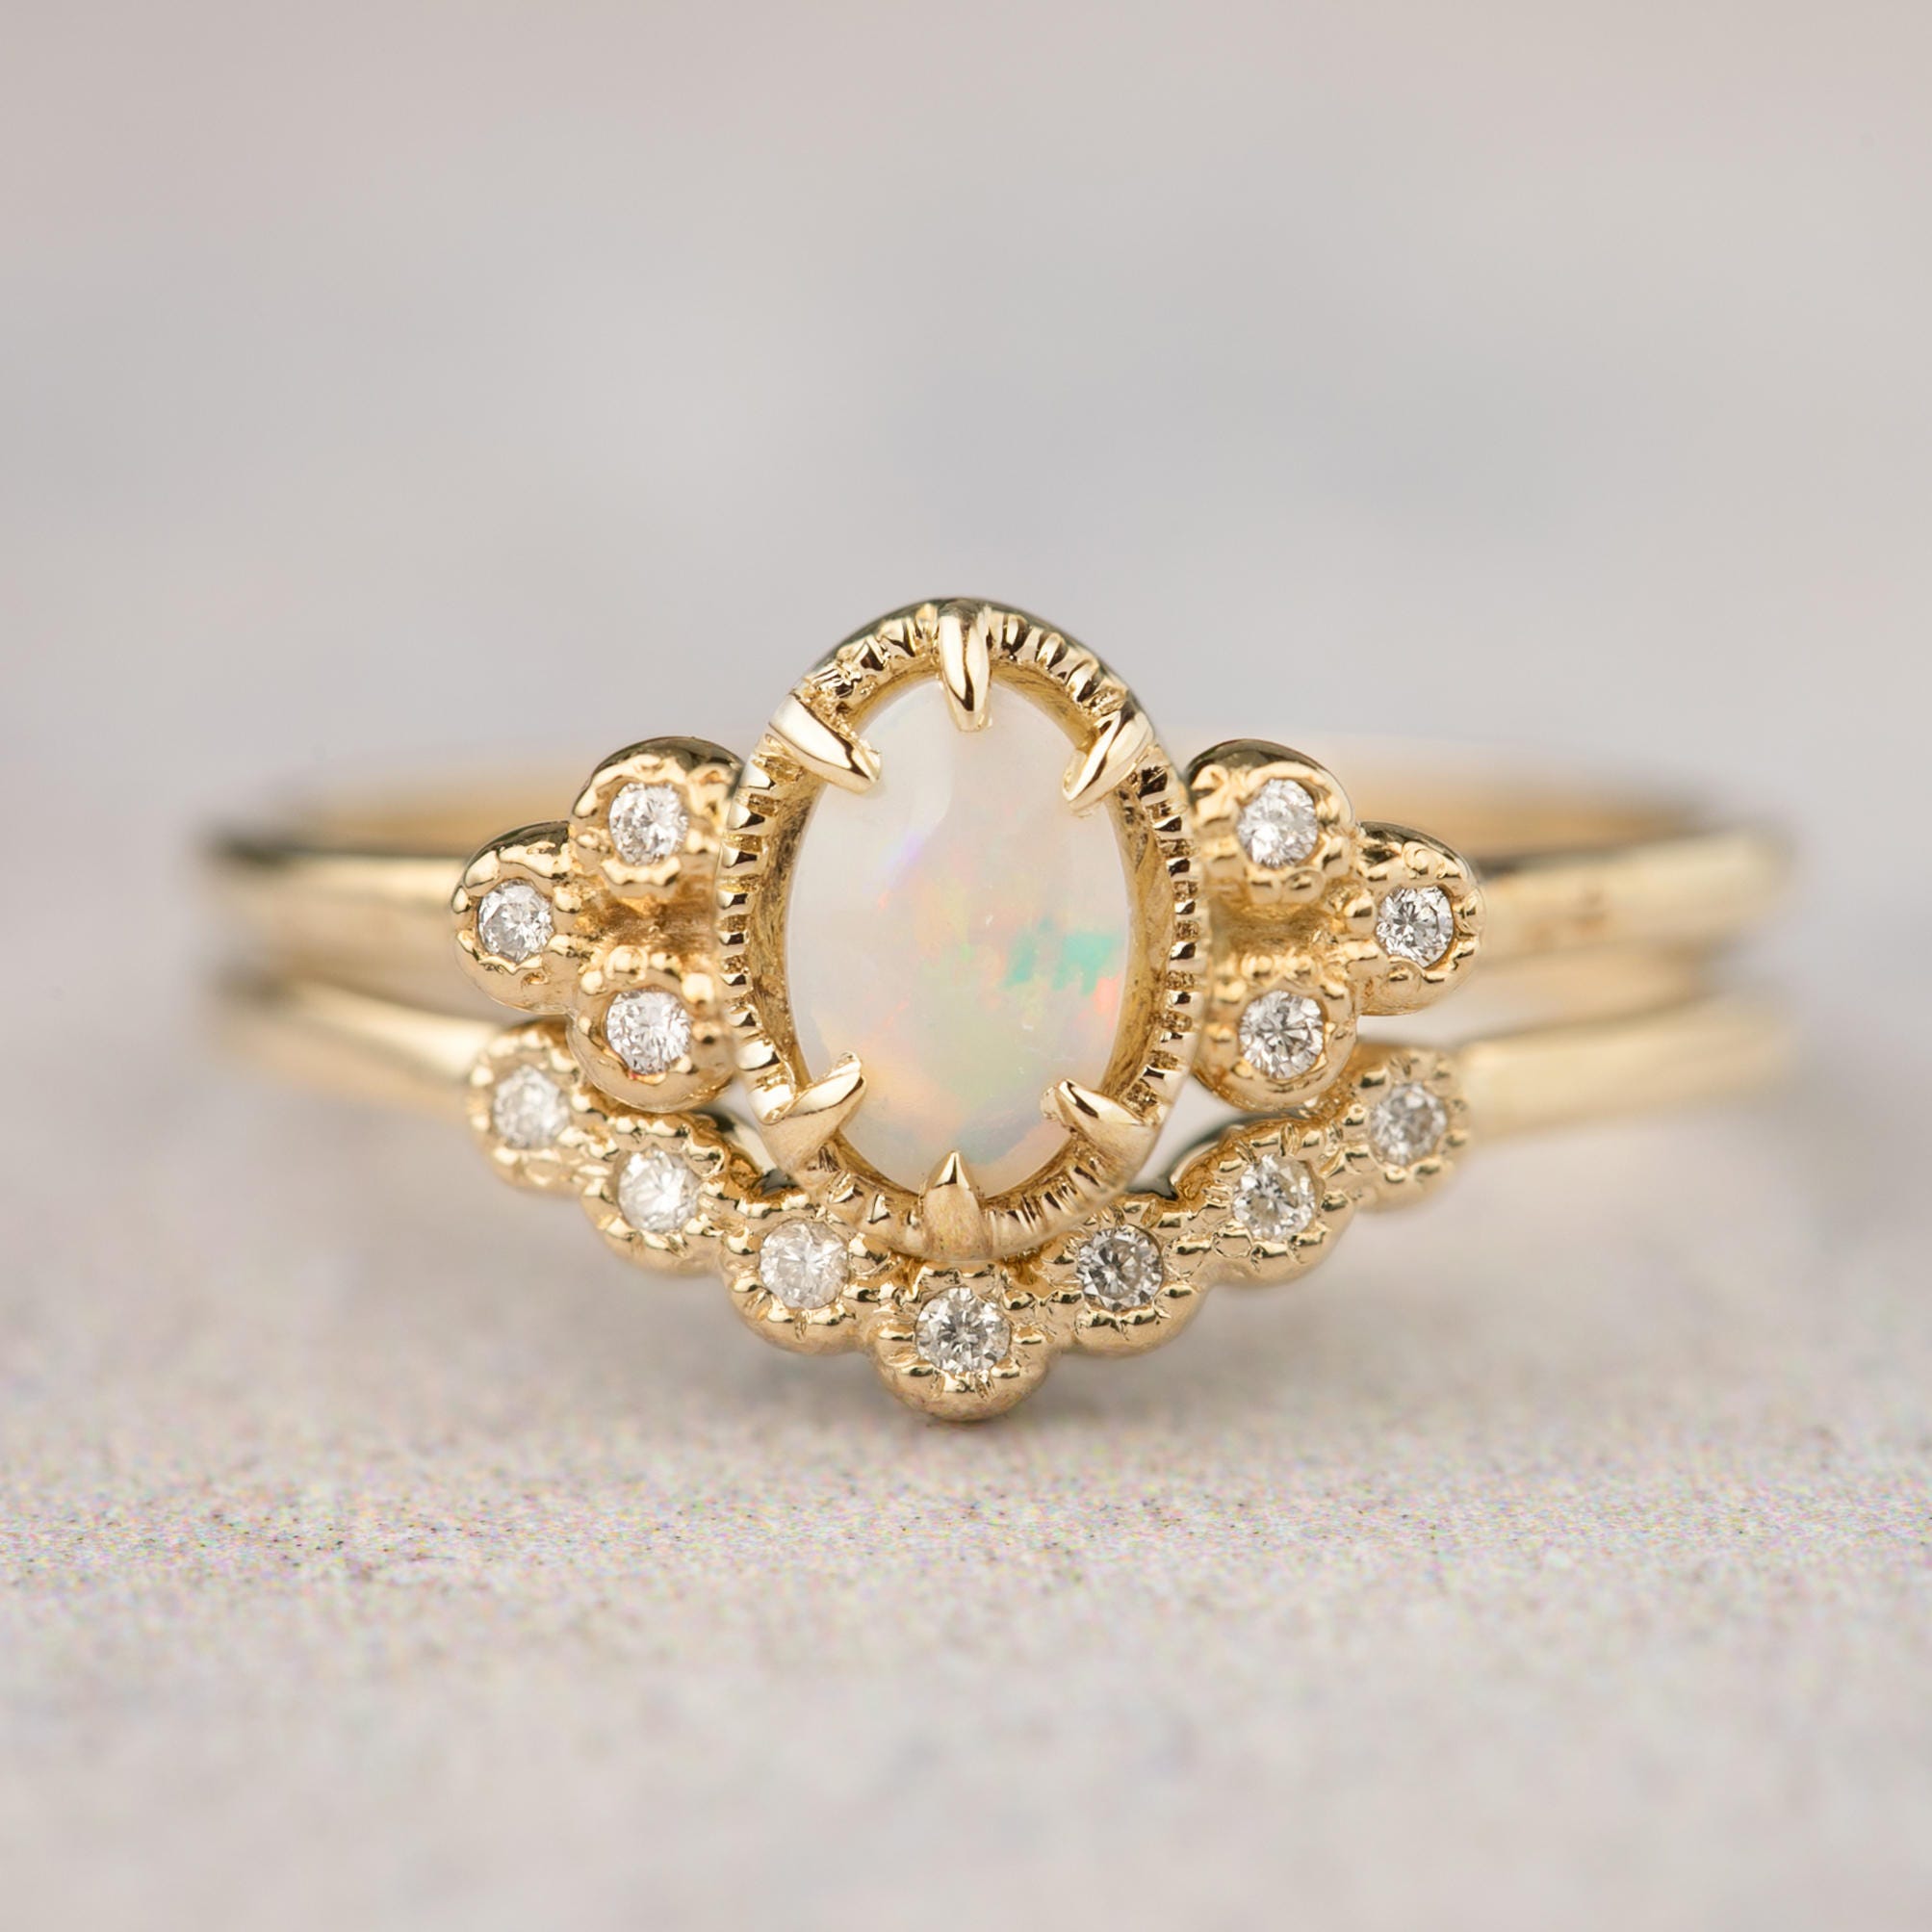 Natural opal engagement ring set Alternative engagement ring | Etsy